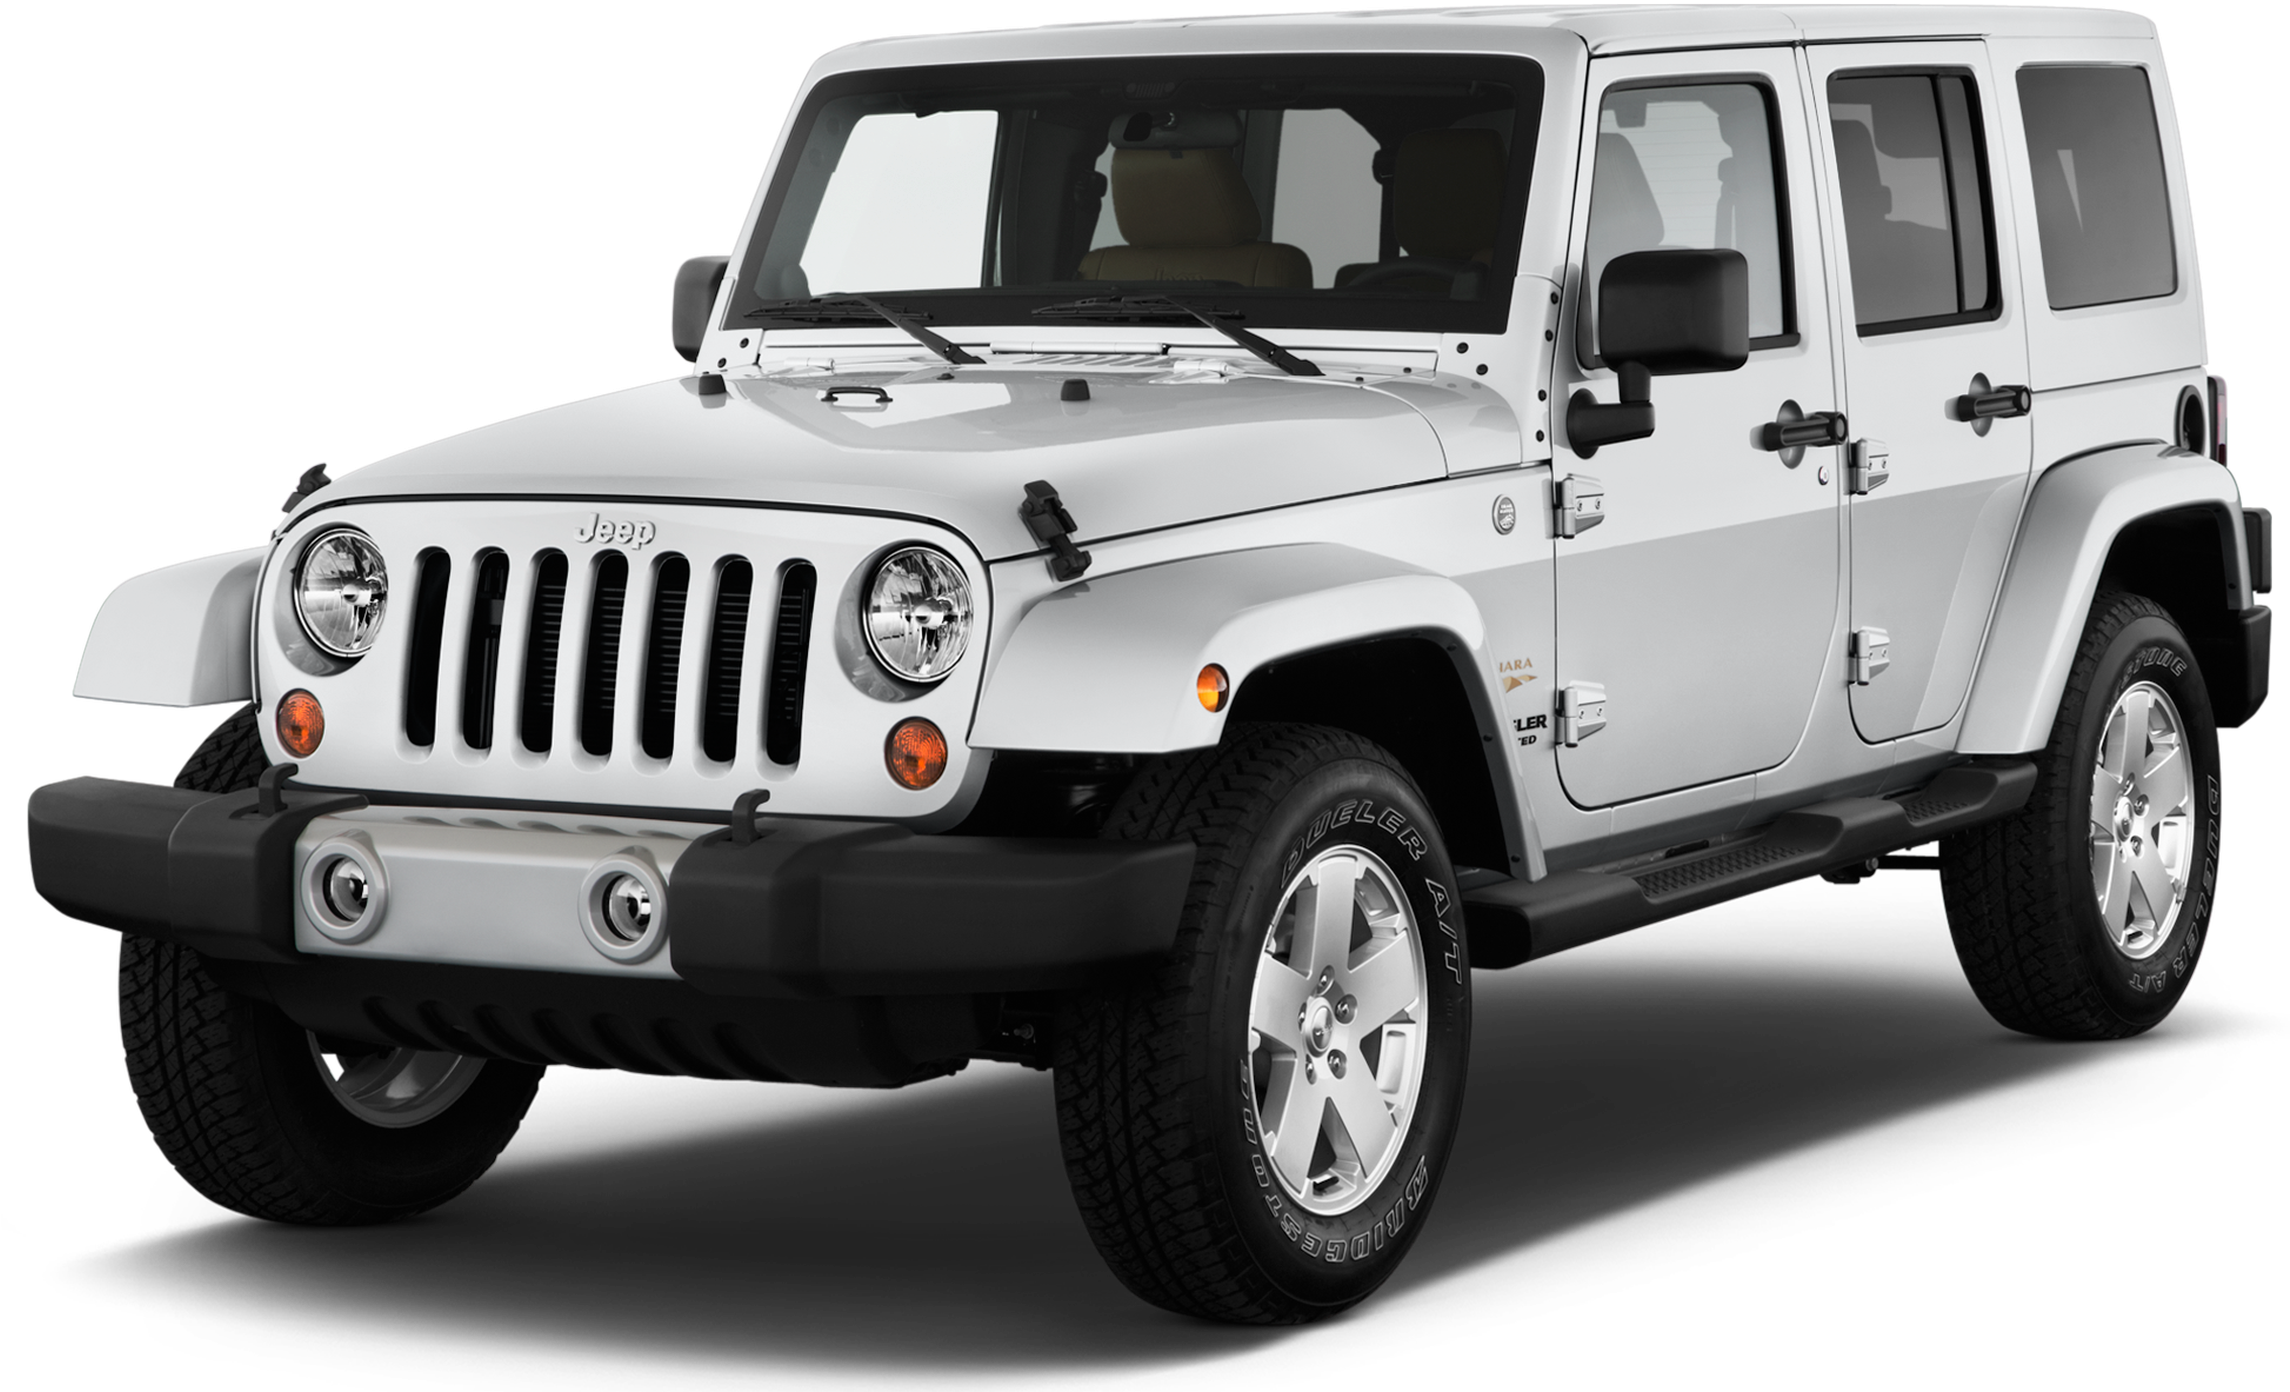 Download Original Image 2409 X 1480 Px - Jeep Wrangler Unlimited Sahara 2017 Clipart (2409x1480), Png Download